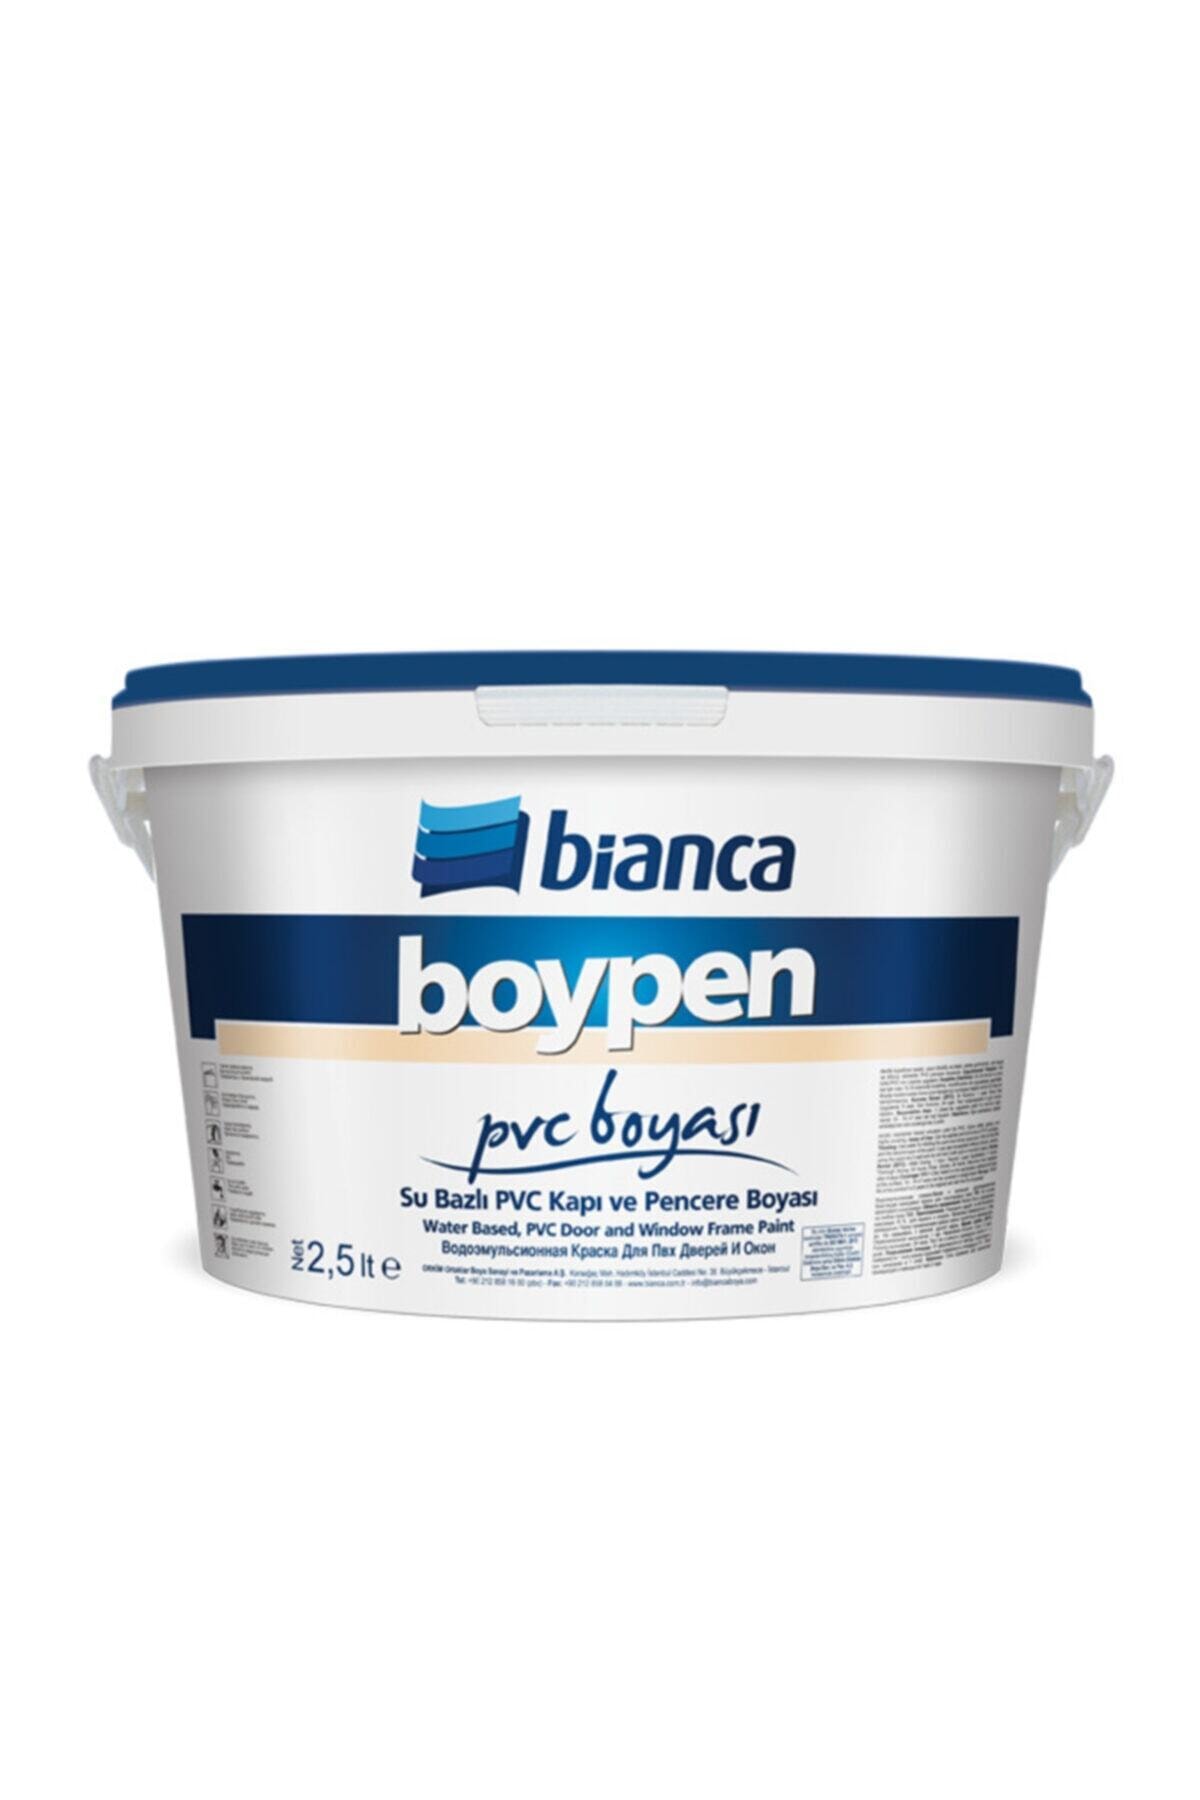 Bianca Boypen Pvc Boyası 2.5 Litre